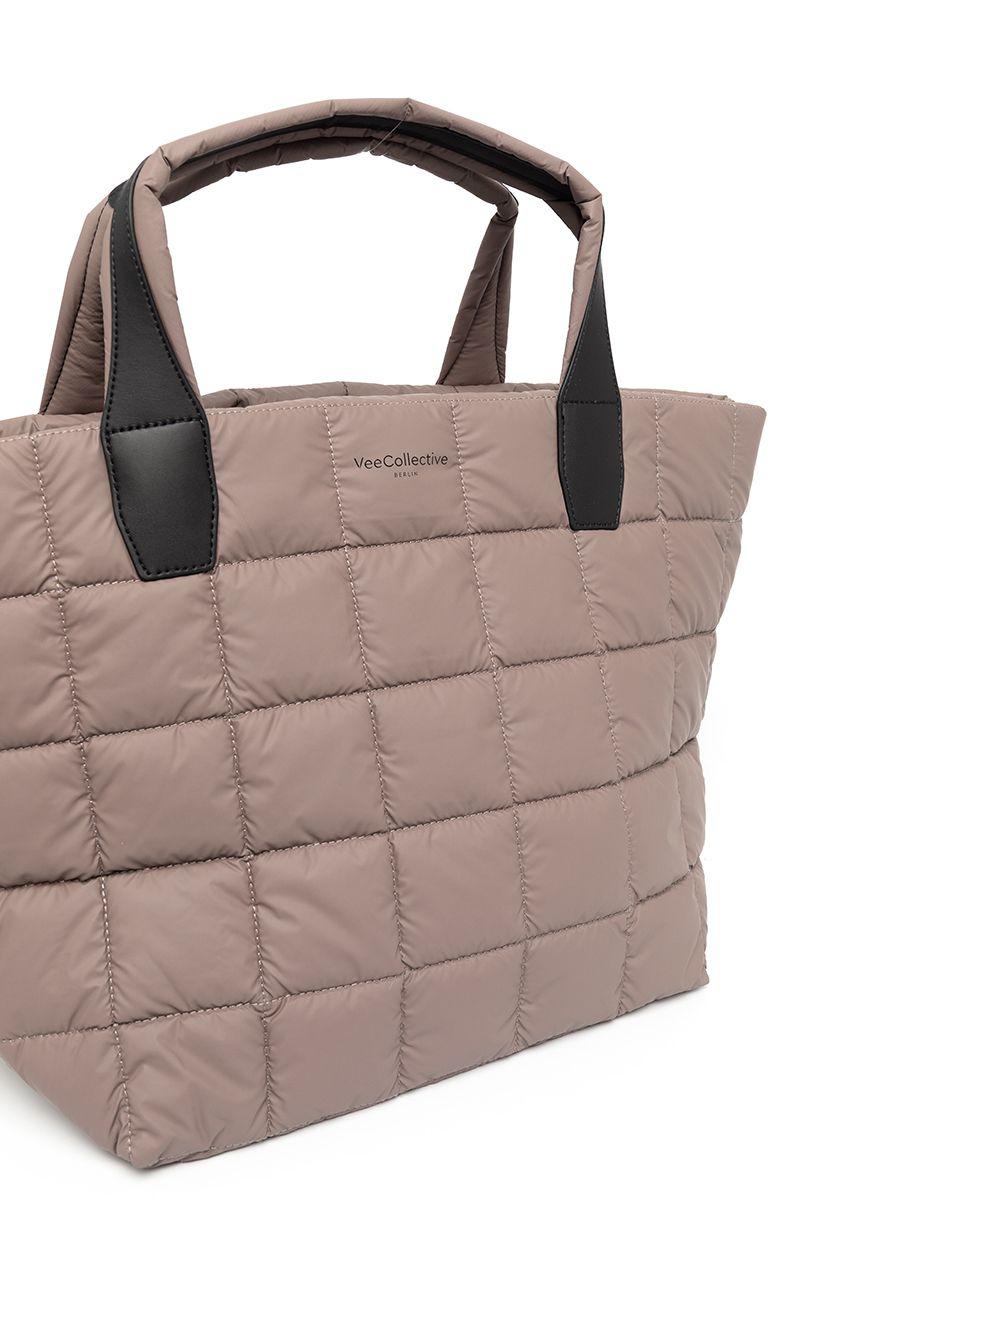 VeeCollective Porter Medium Tote Bag in Brown | Lyst